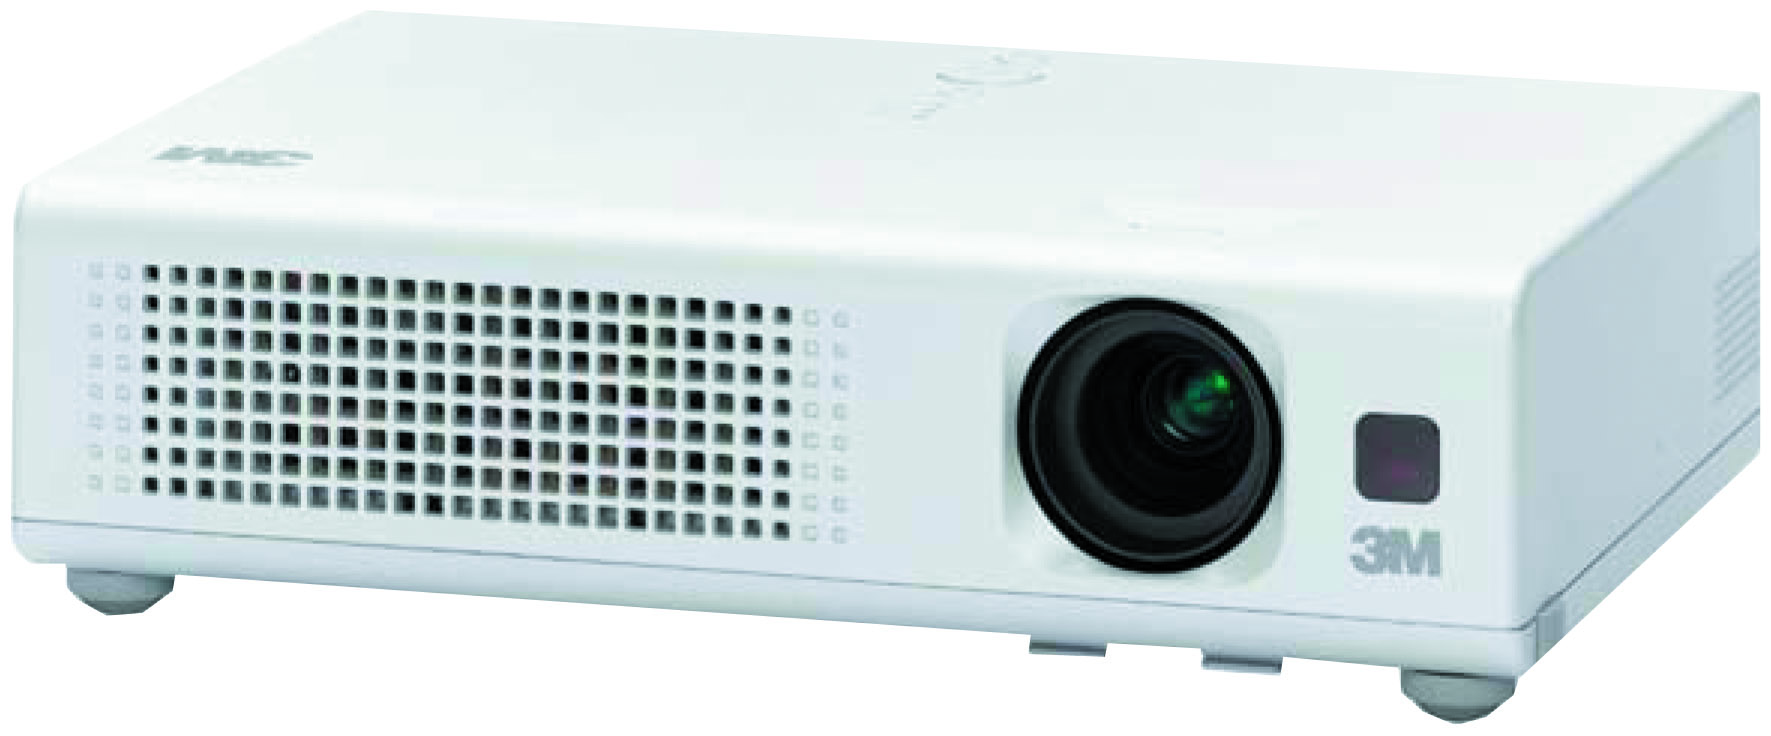 *3M-S15i OH projector,1500 Lumens, SVGA